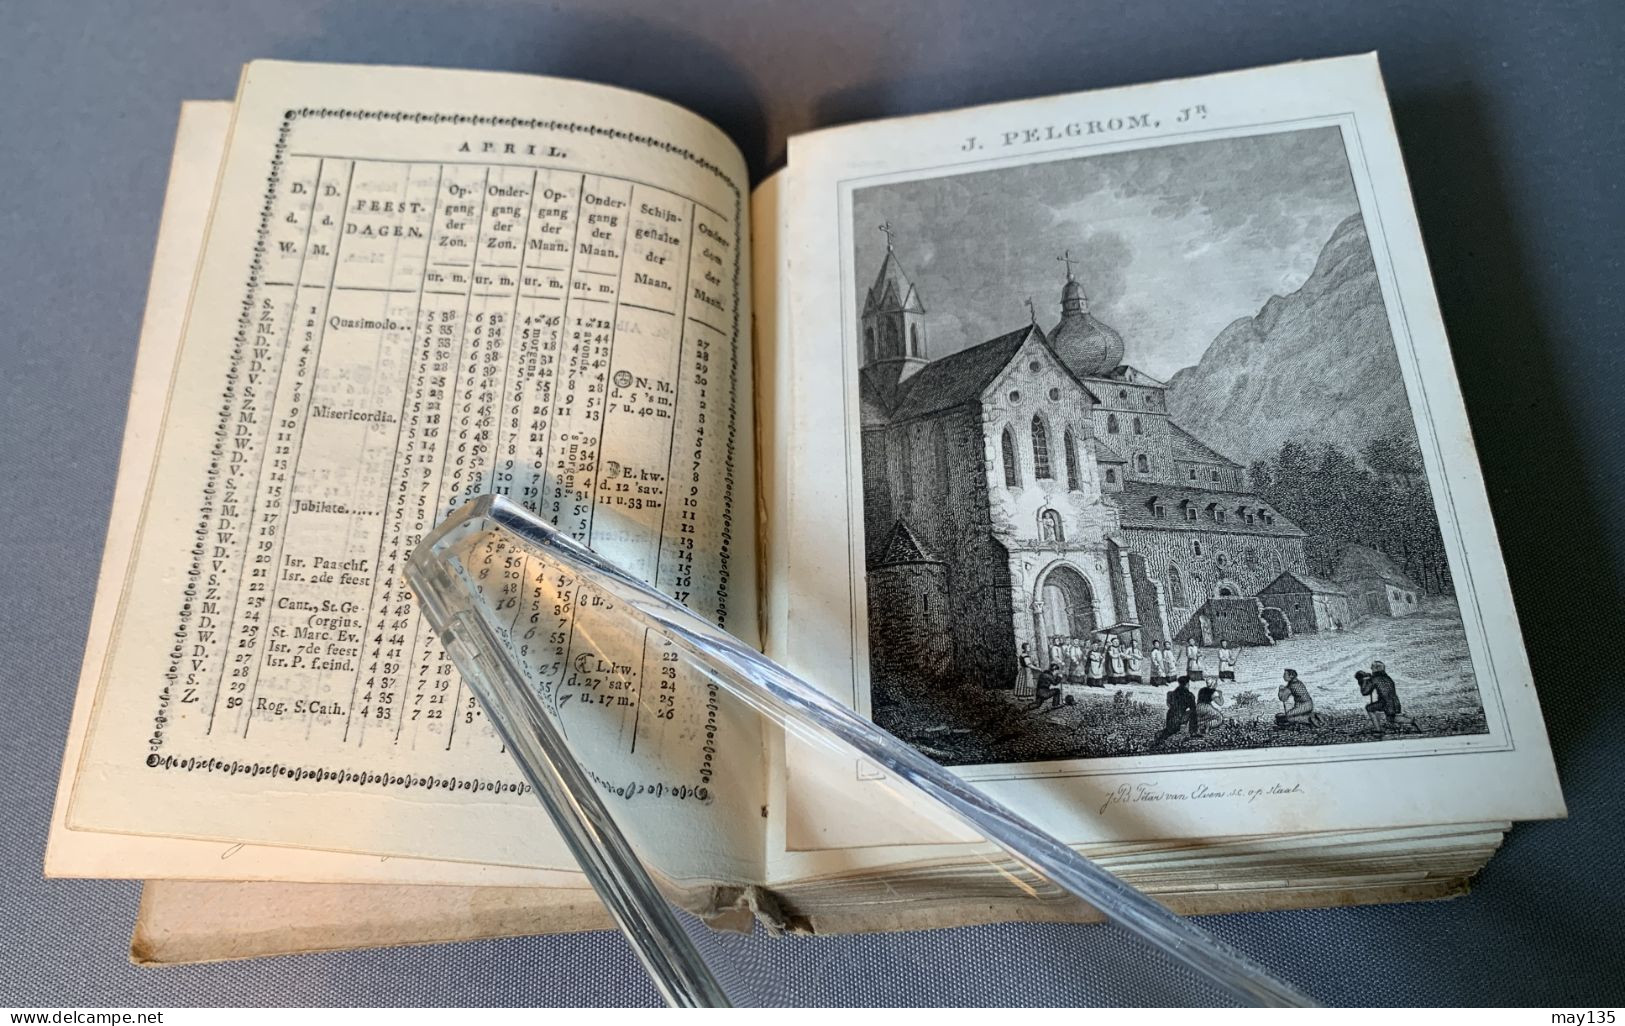 Anno 1837 - Nederlandsche Muzen - Almanak - J. Immerzeel , Junior Te Amsterdam - Antiguos